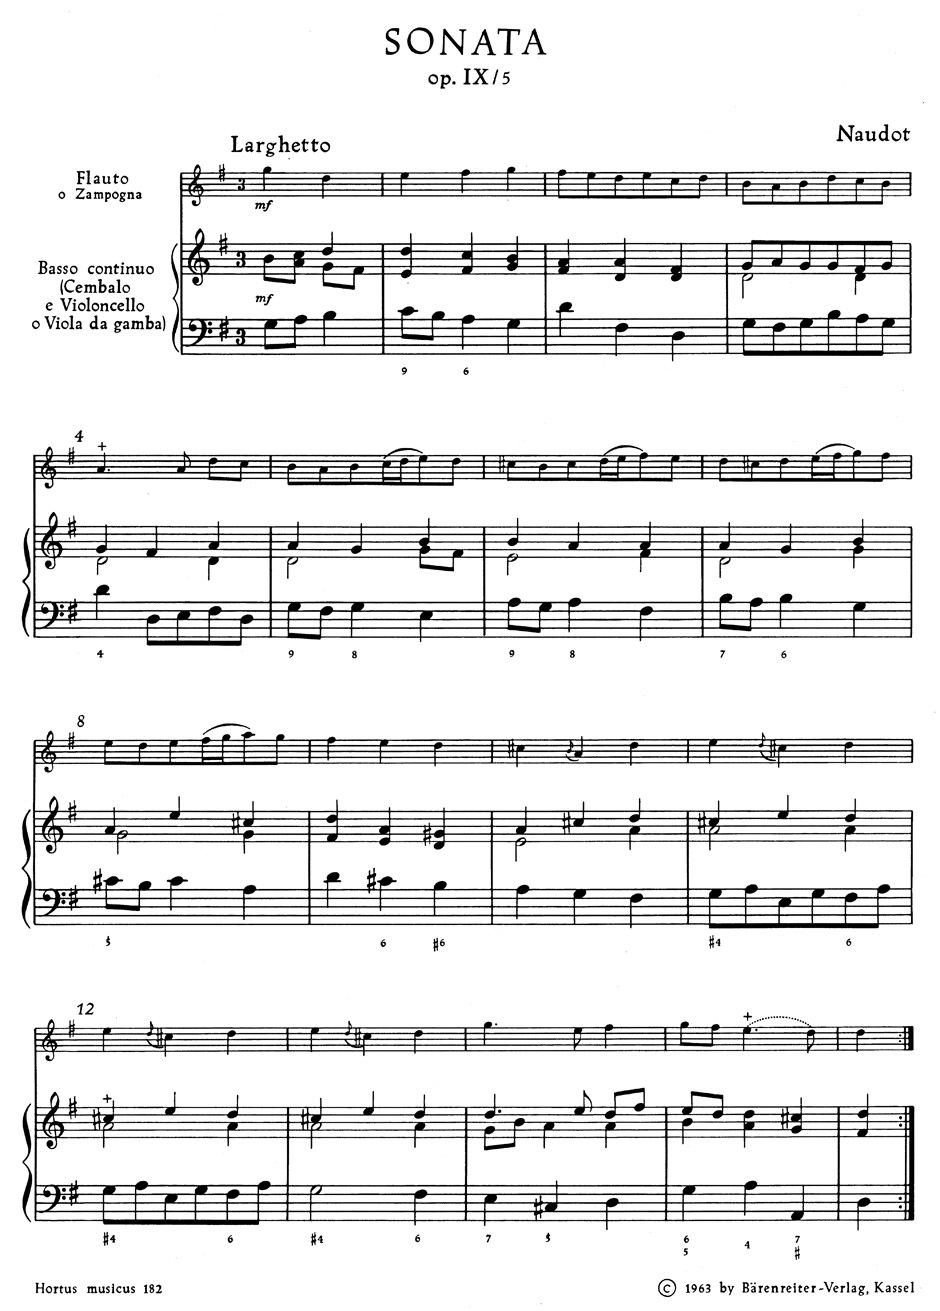 jacques-christophe-naudot-sonate-op-9-5-sol-majeur_0006.JPG